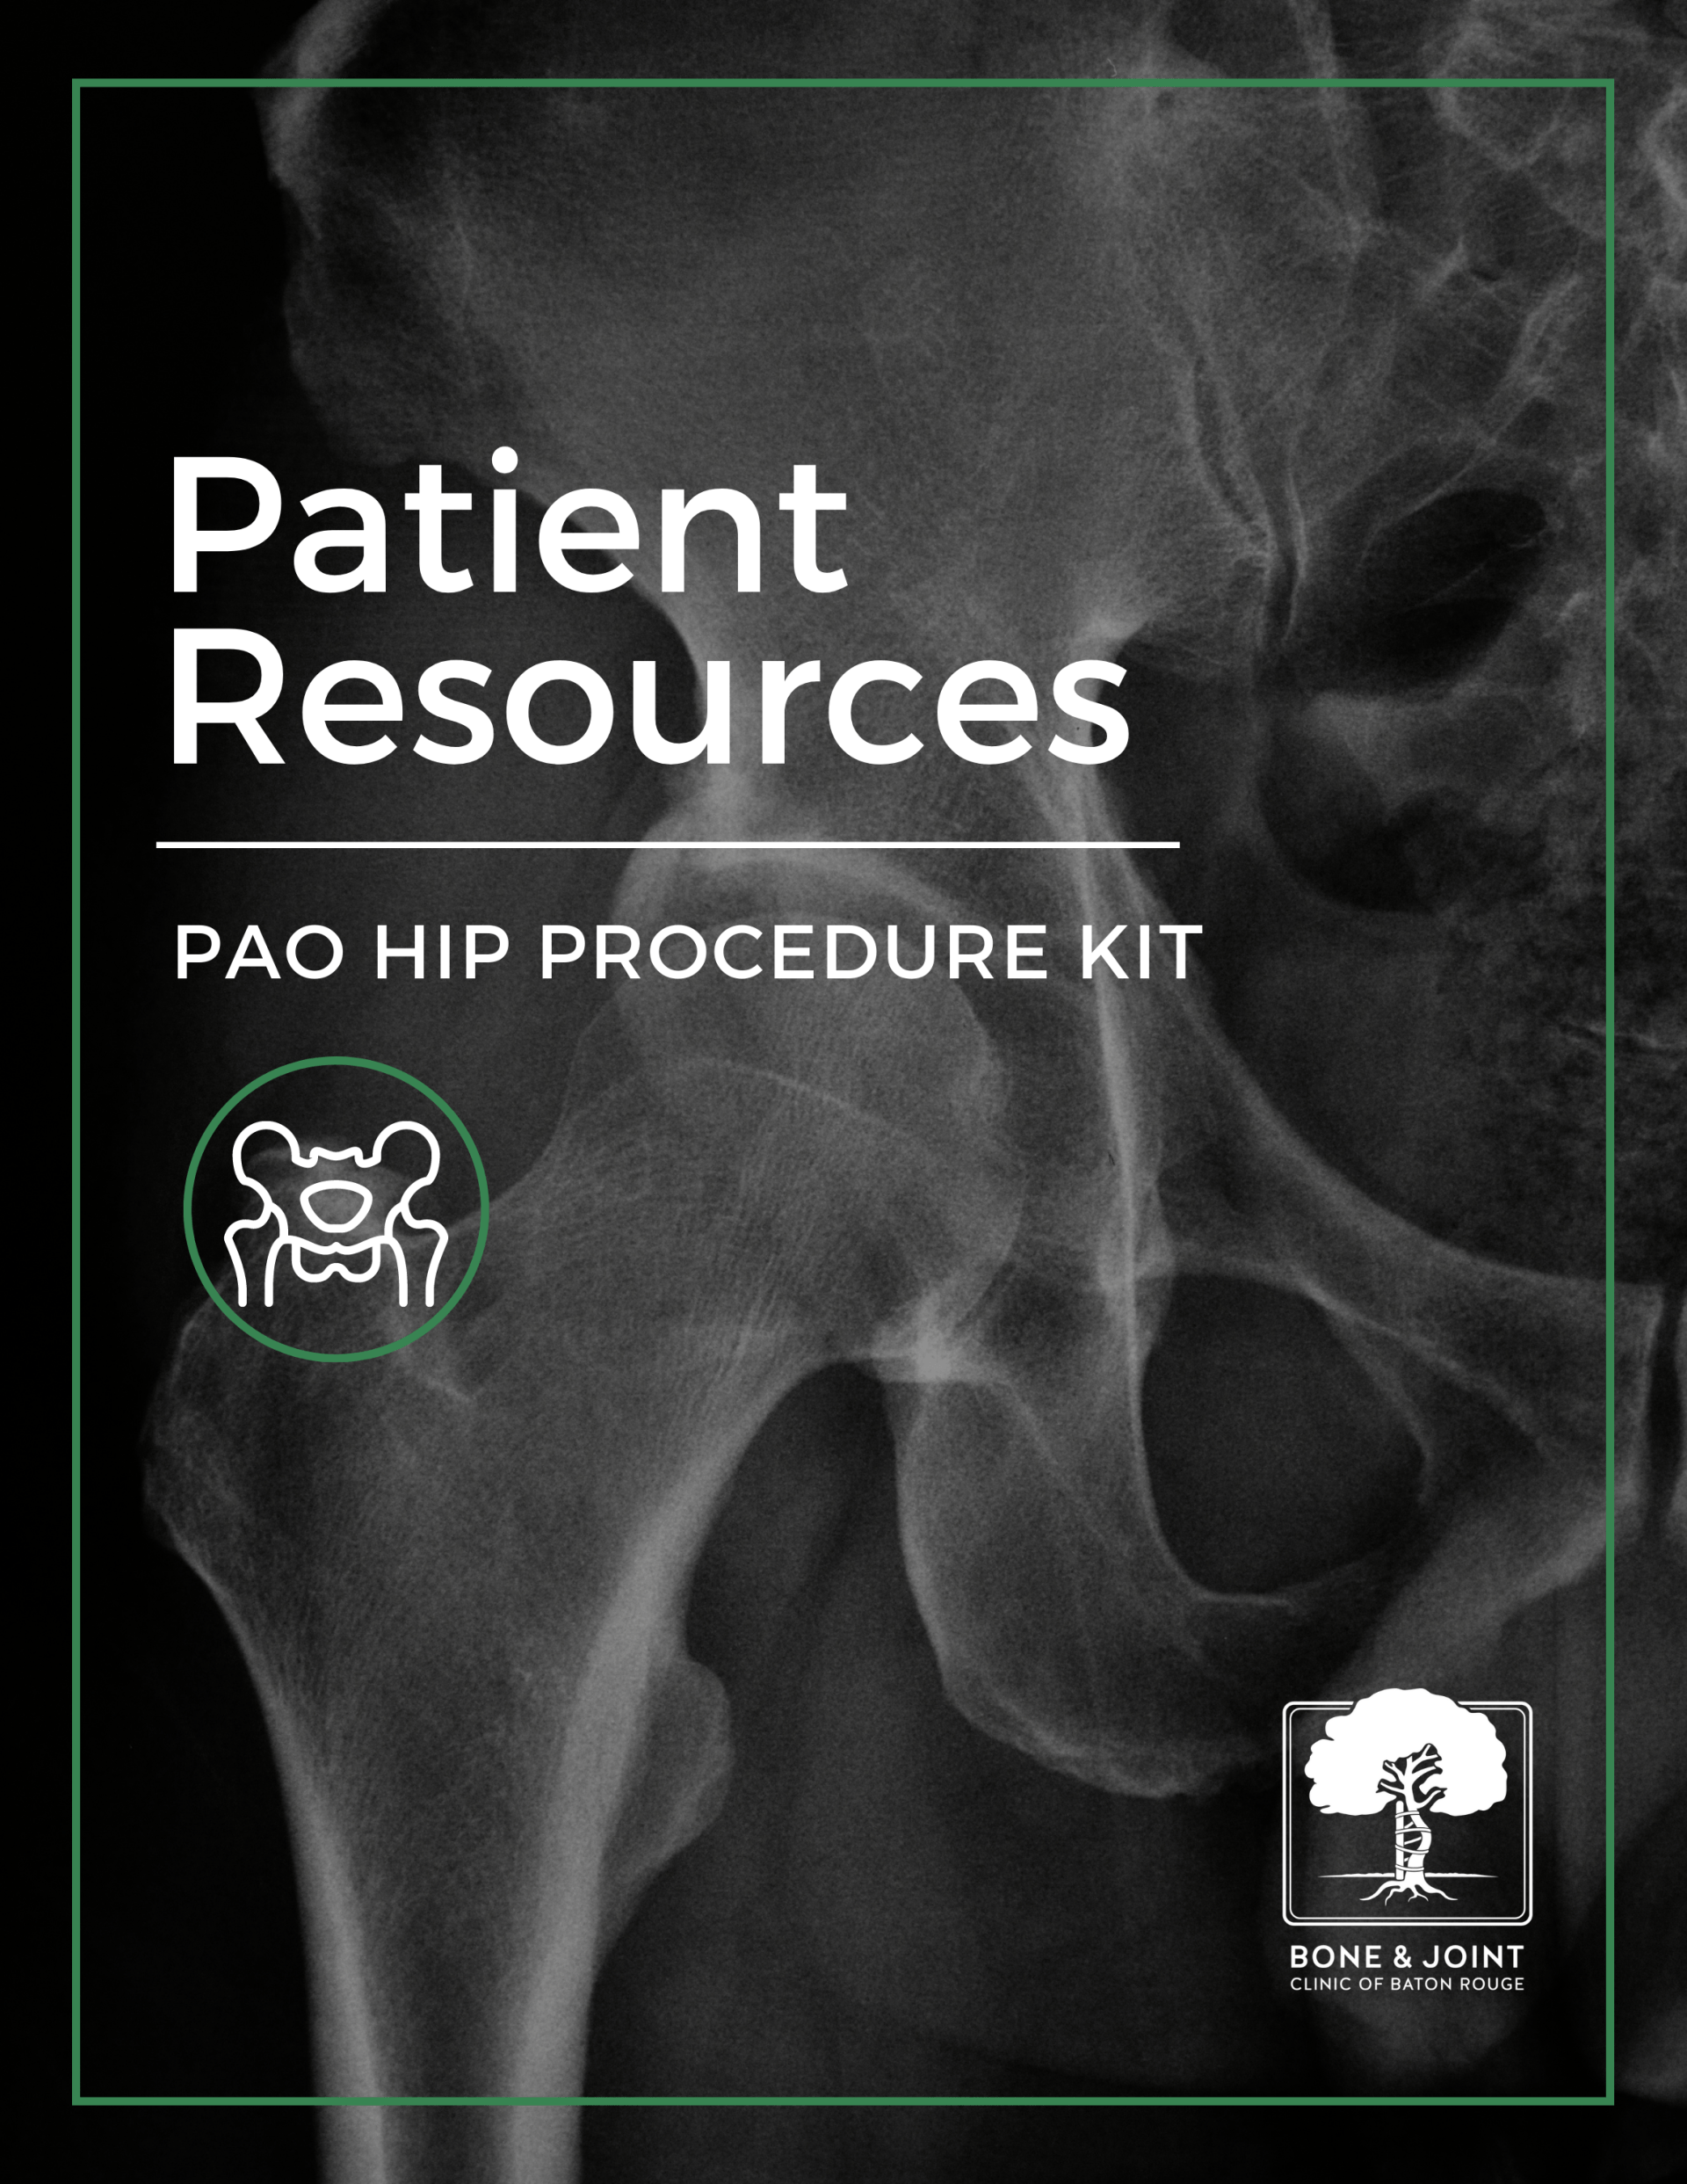 PAO hip procedure patient resources kit